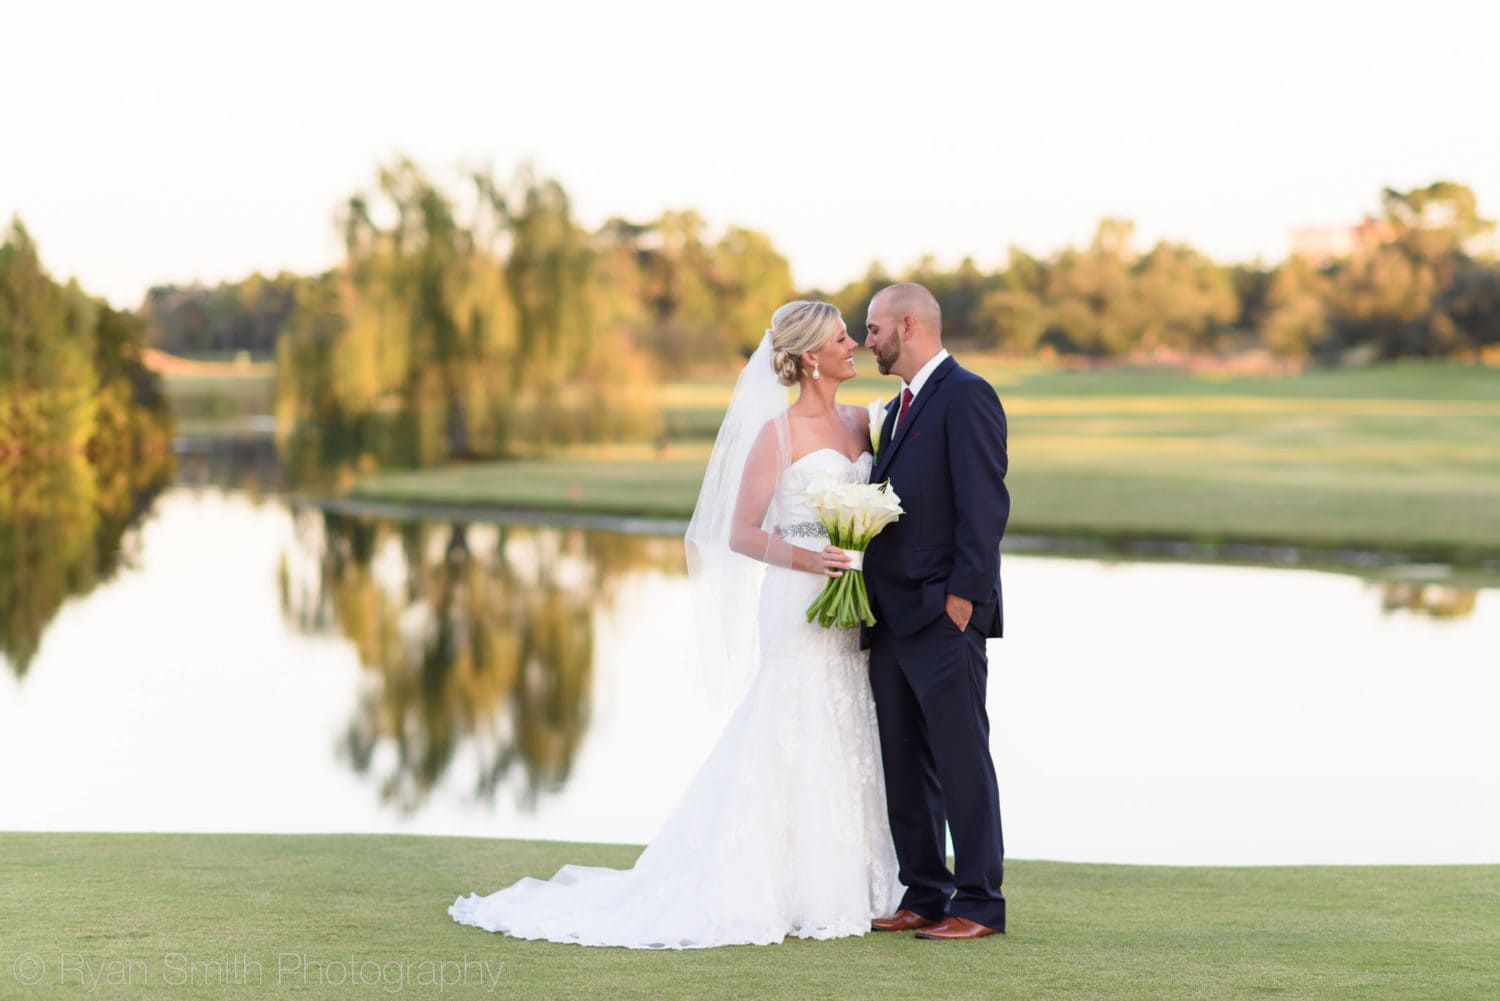 Bride and groom by golf course lake - Members Club - Grande Dunes